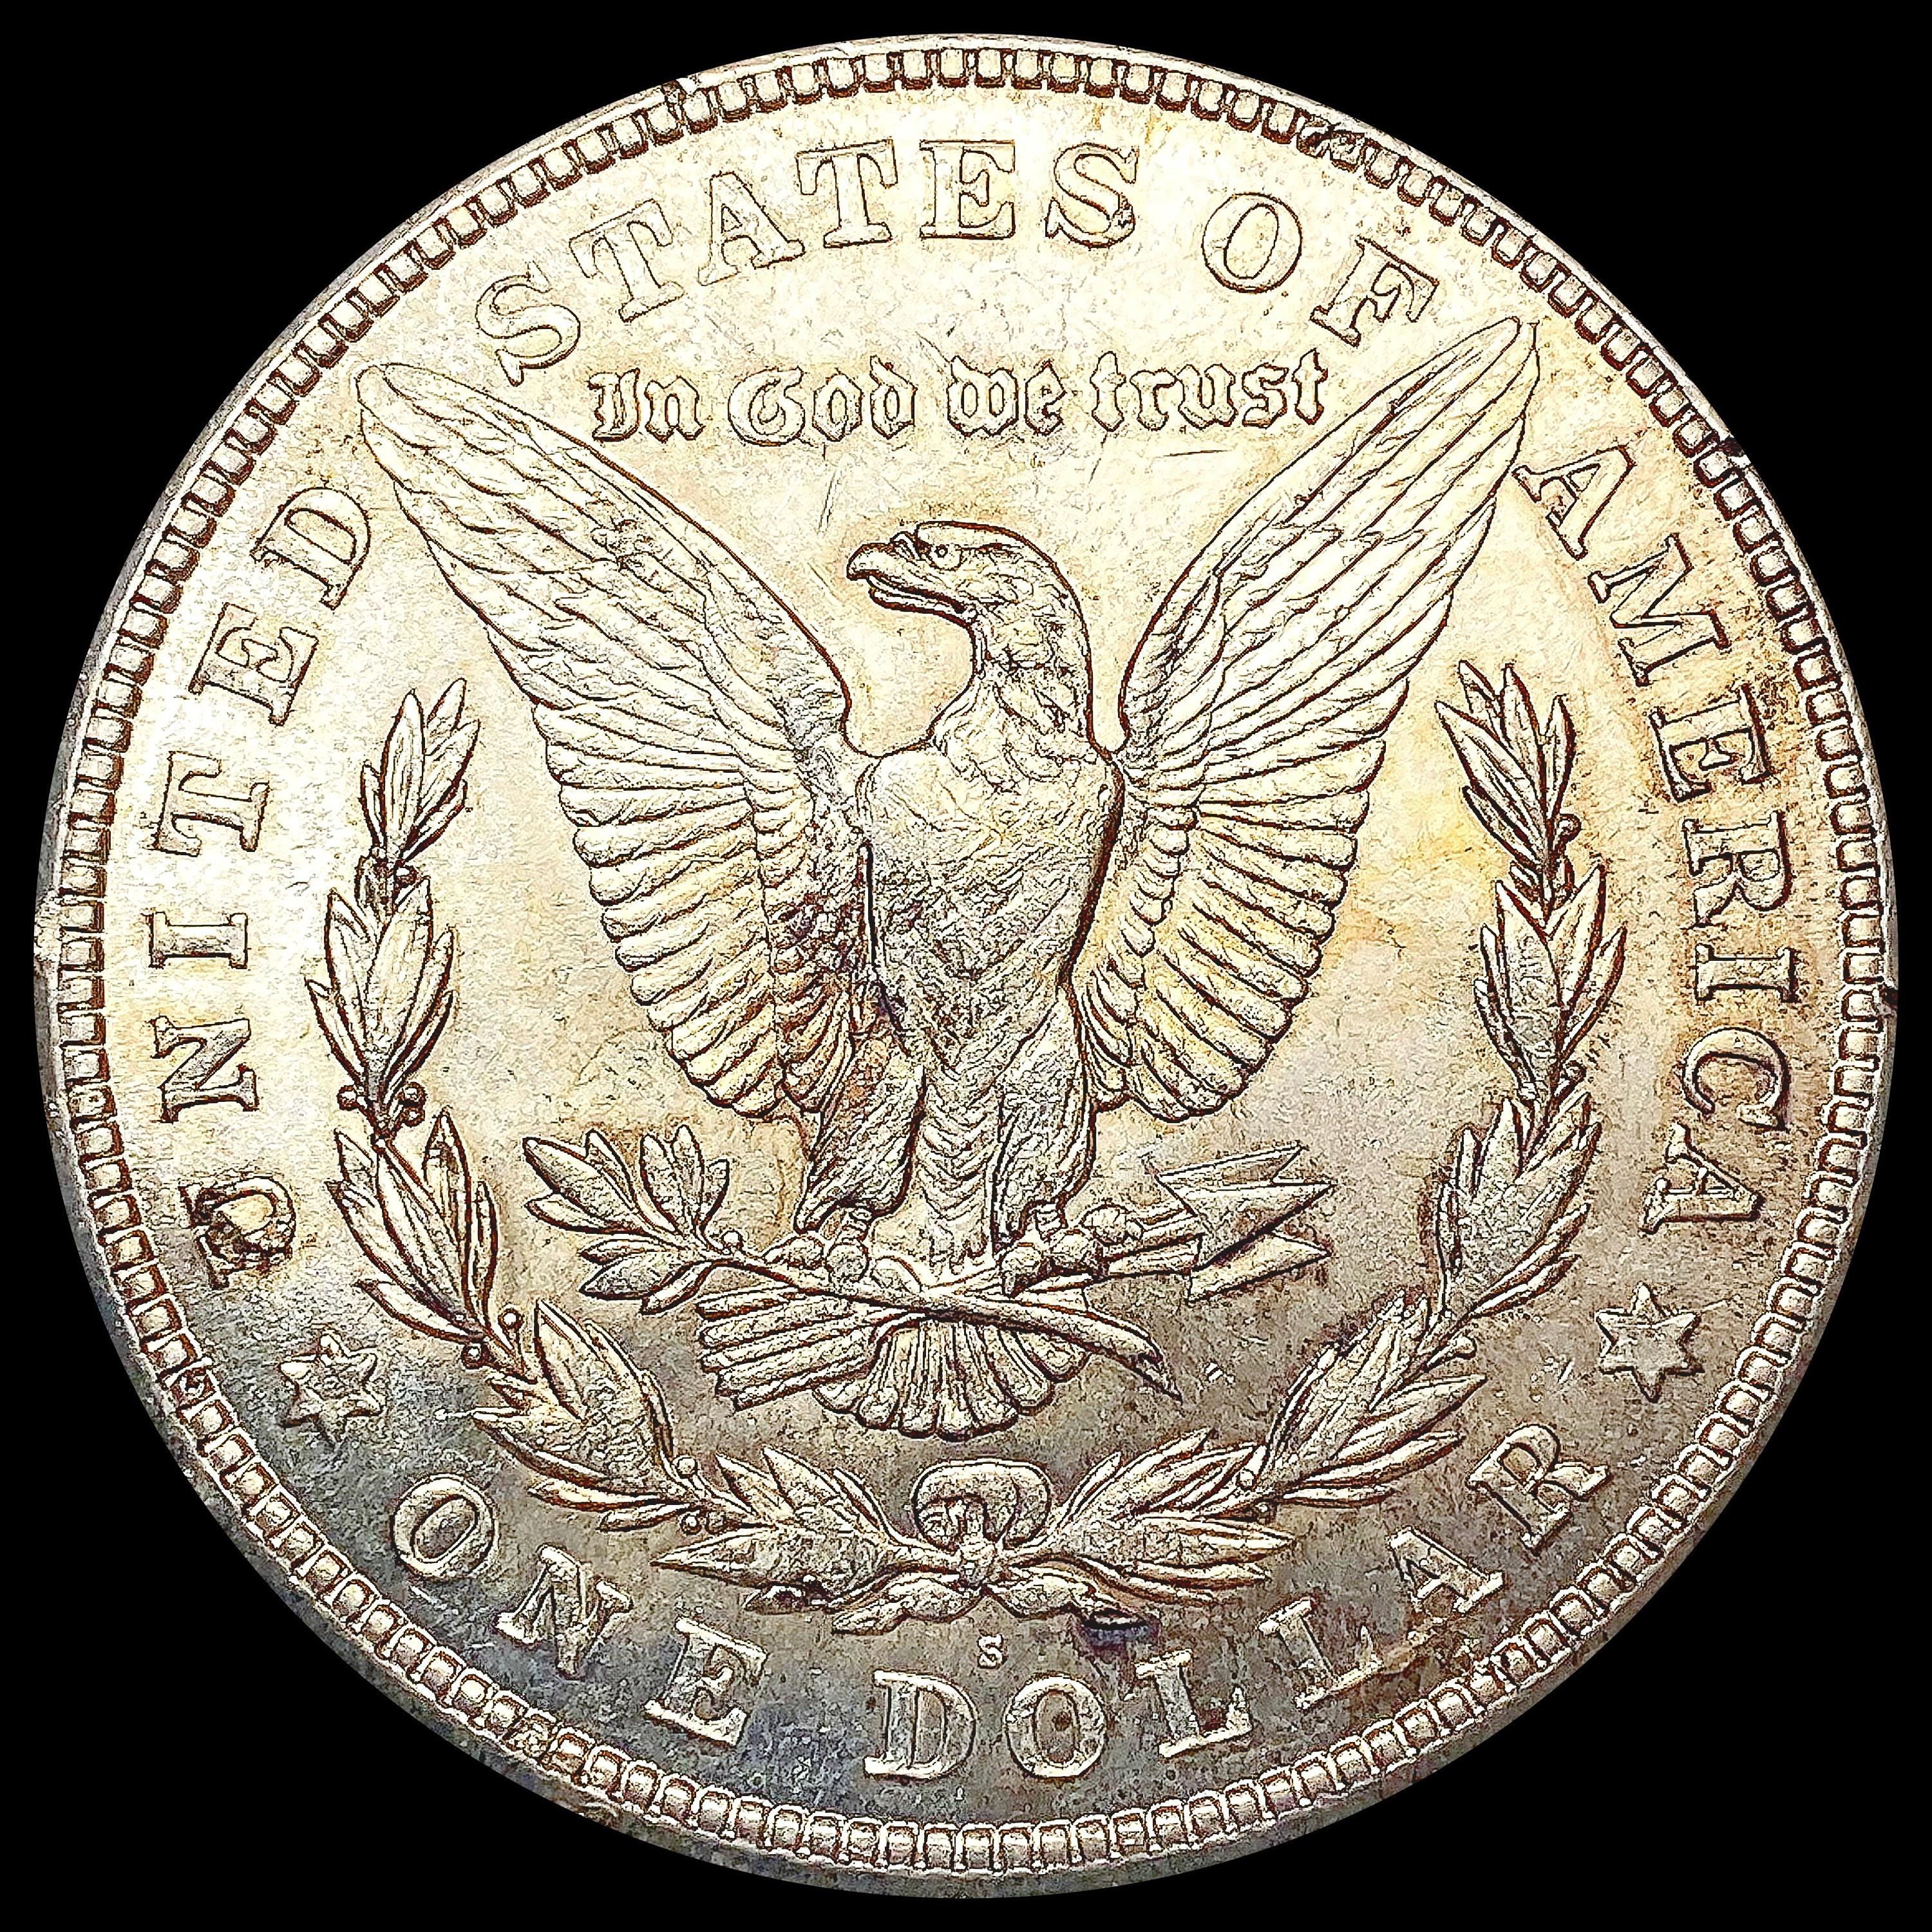 1921-S Morgan Silver Dollar CLOSELY UNCIRCULATED